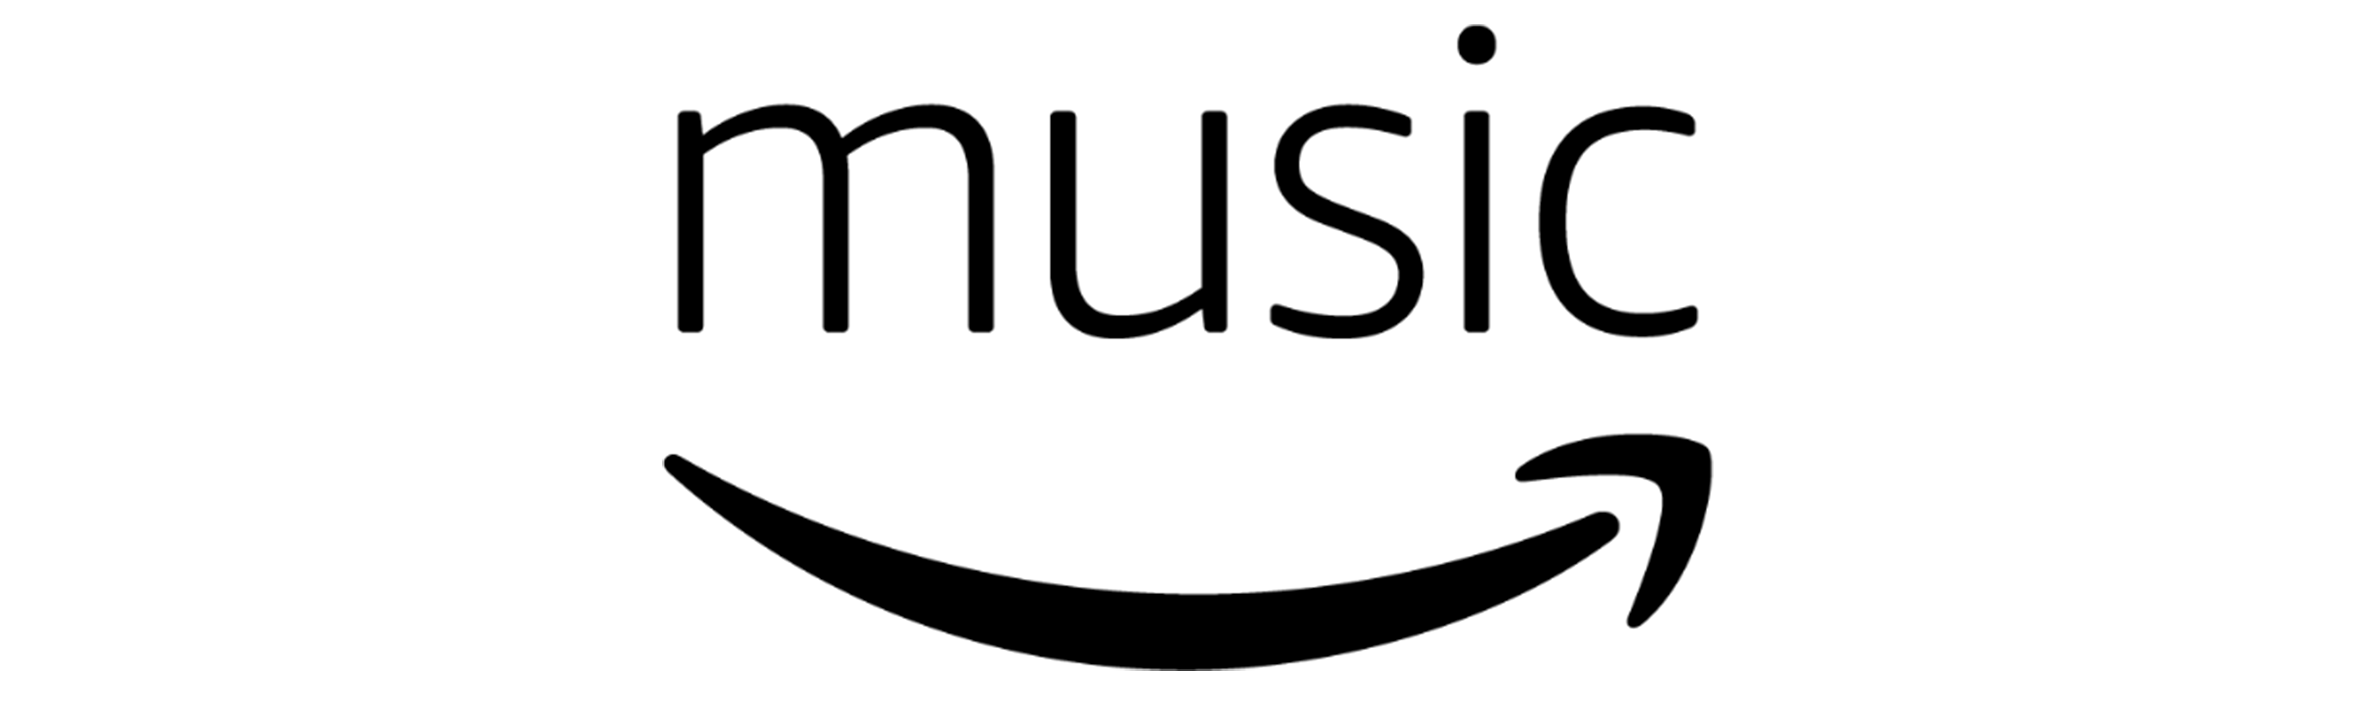 Amazon Music Logo Jordread